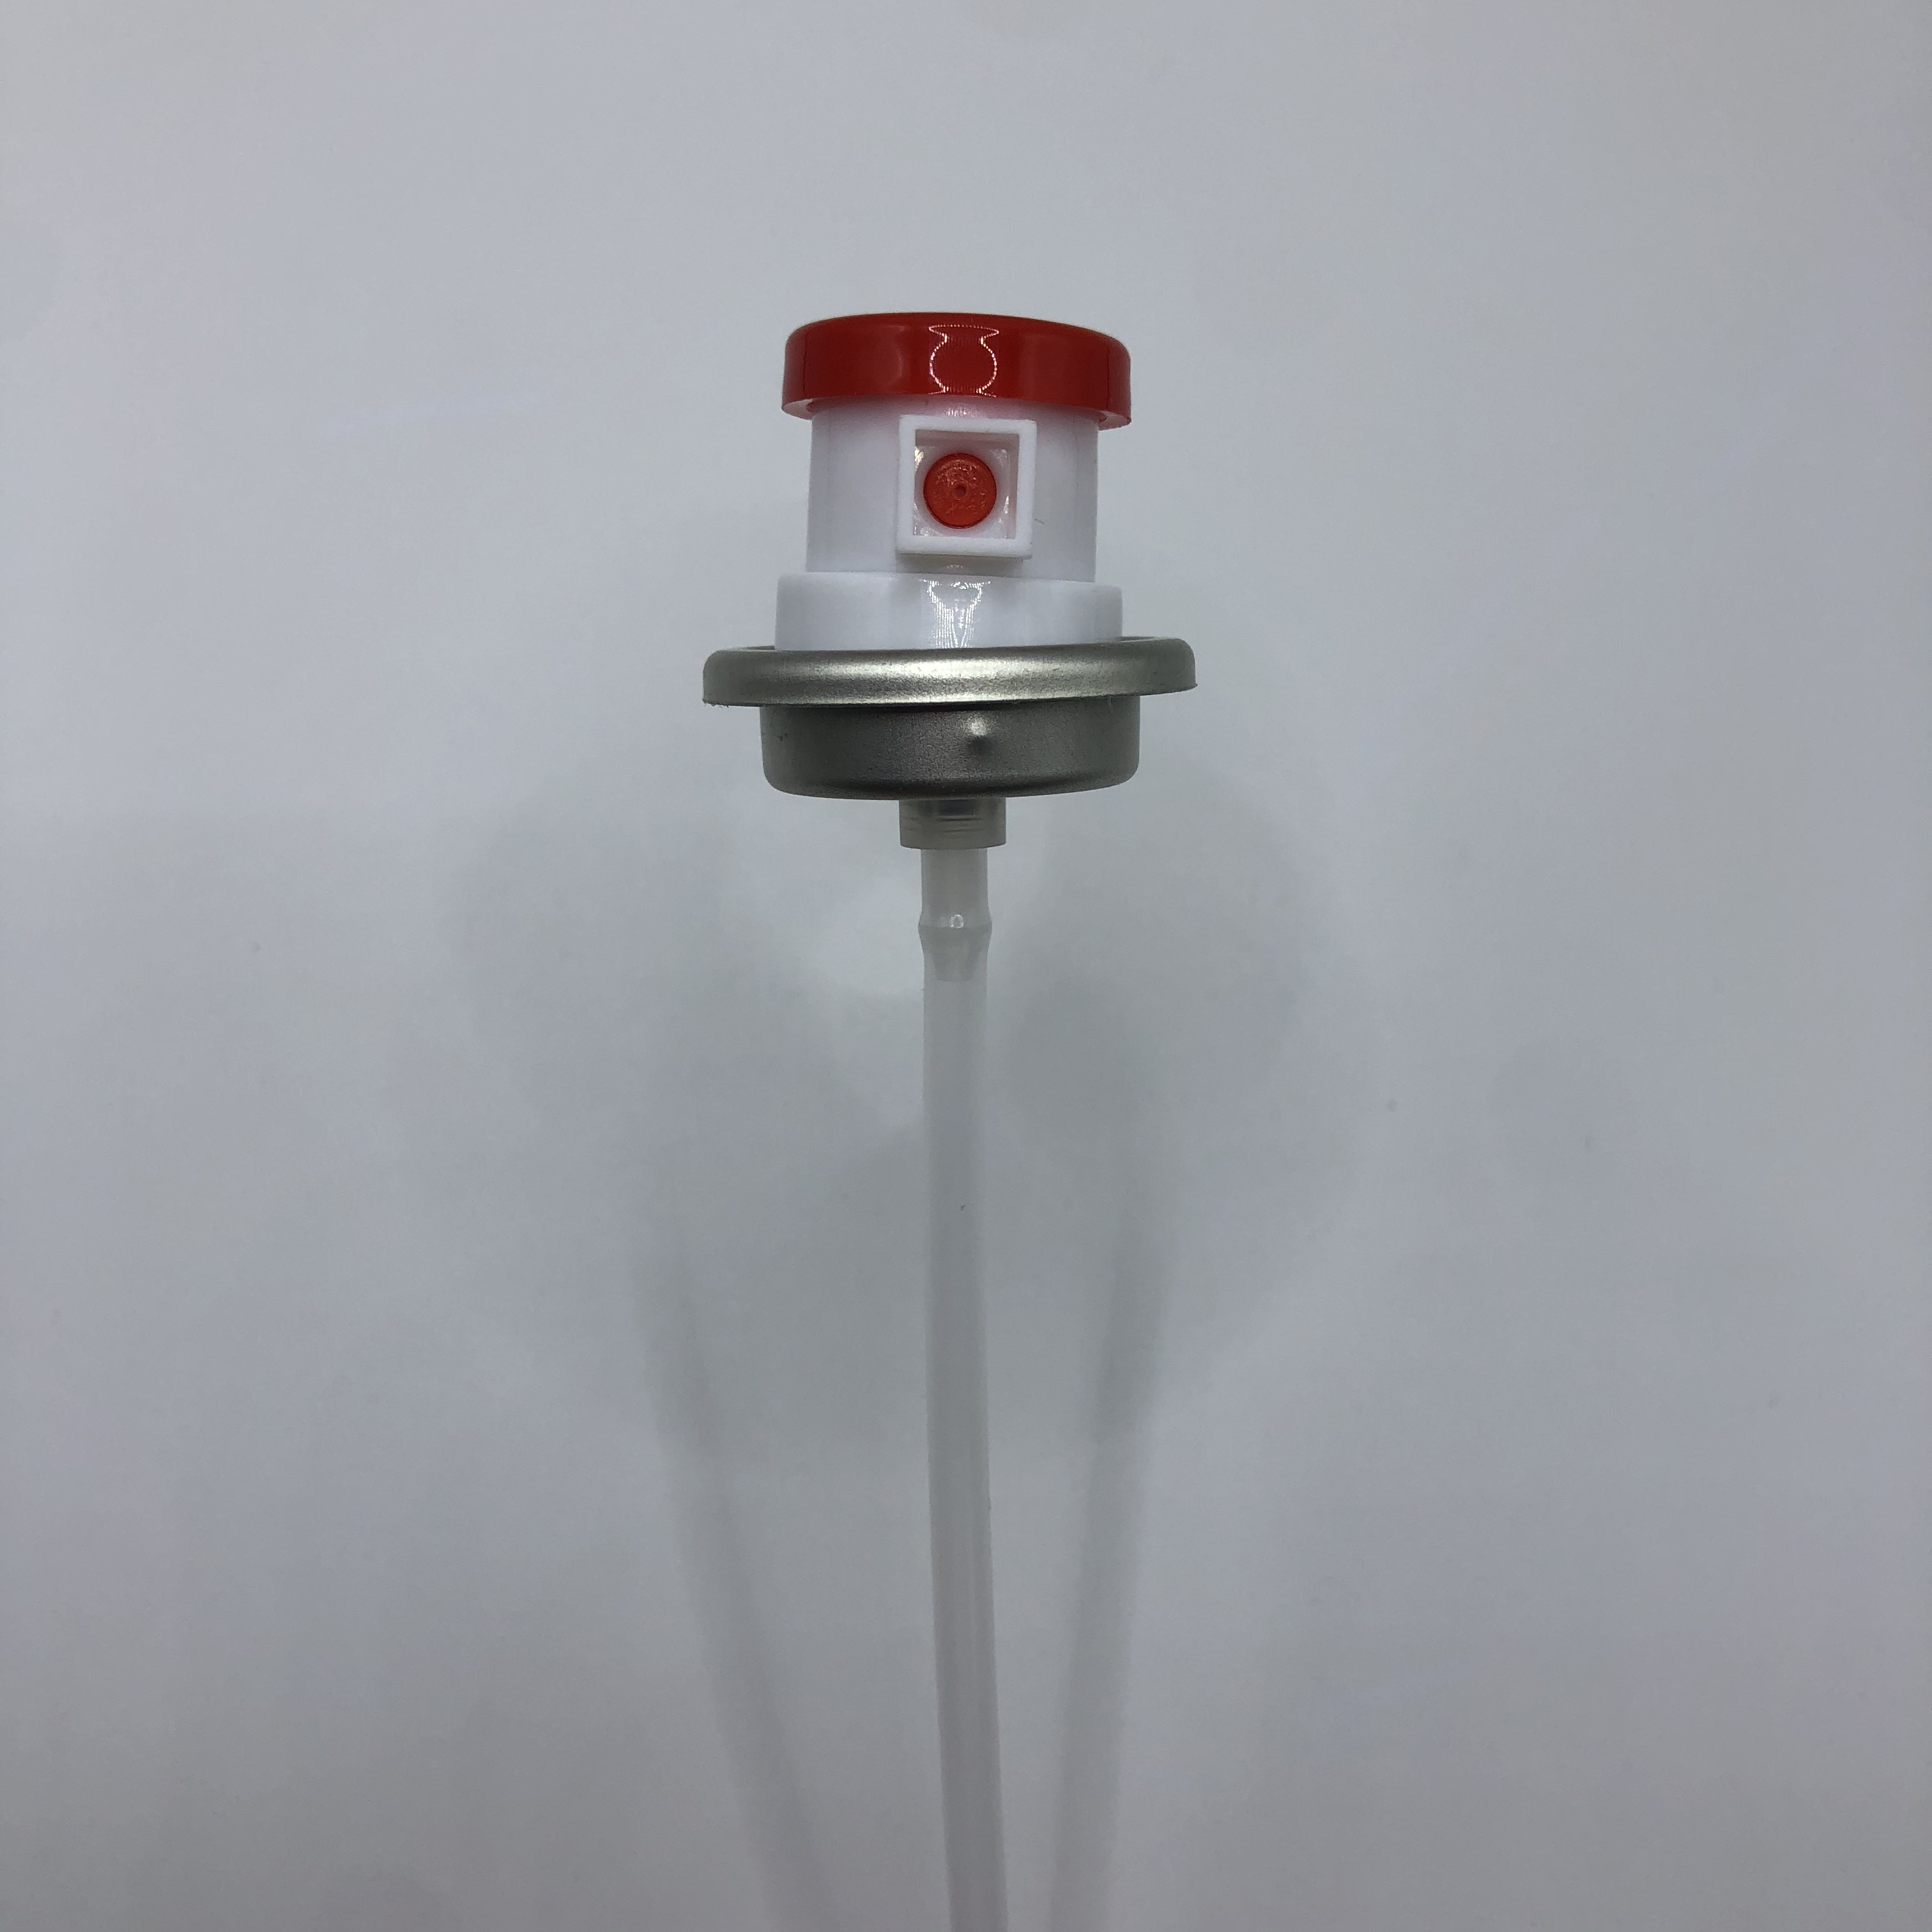 Compact Deodorant Spray Valve Portable Aerosol Dispenser for On The Go Refreshment